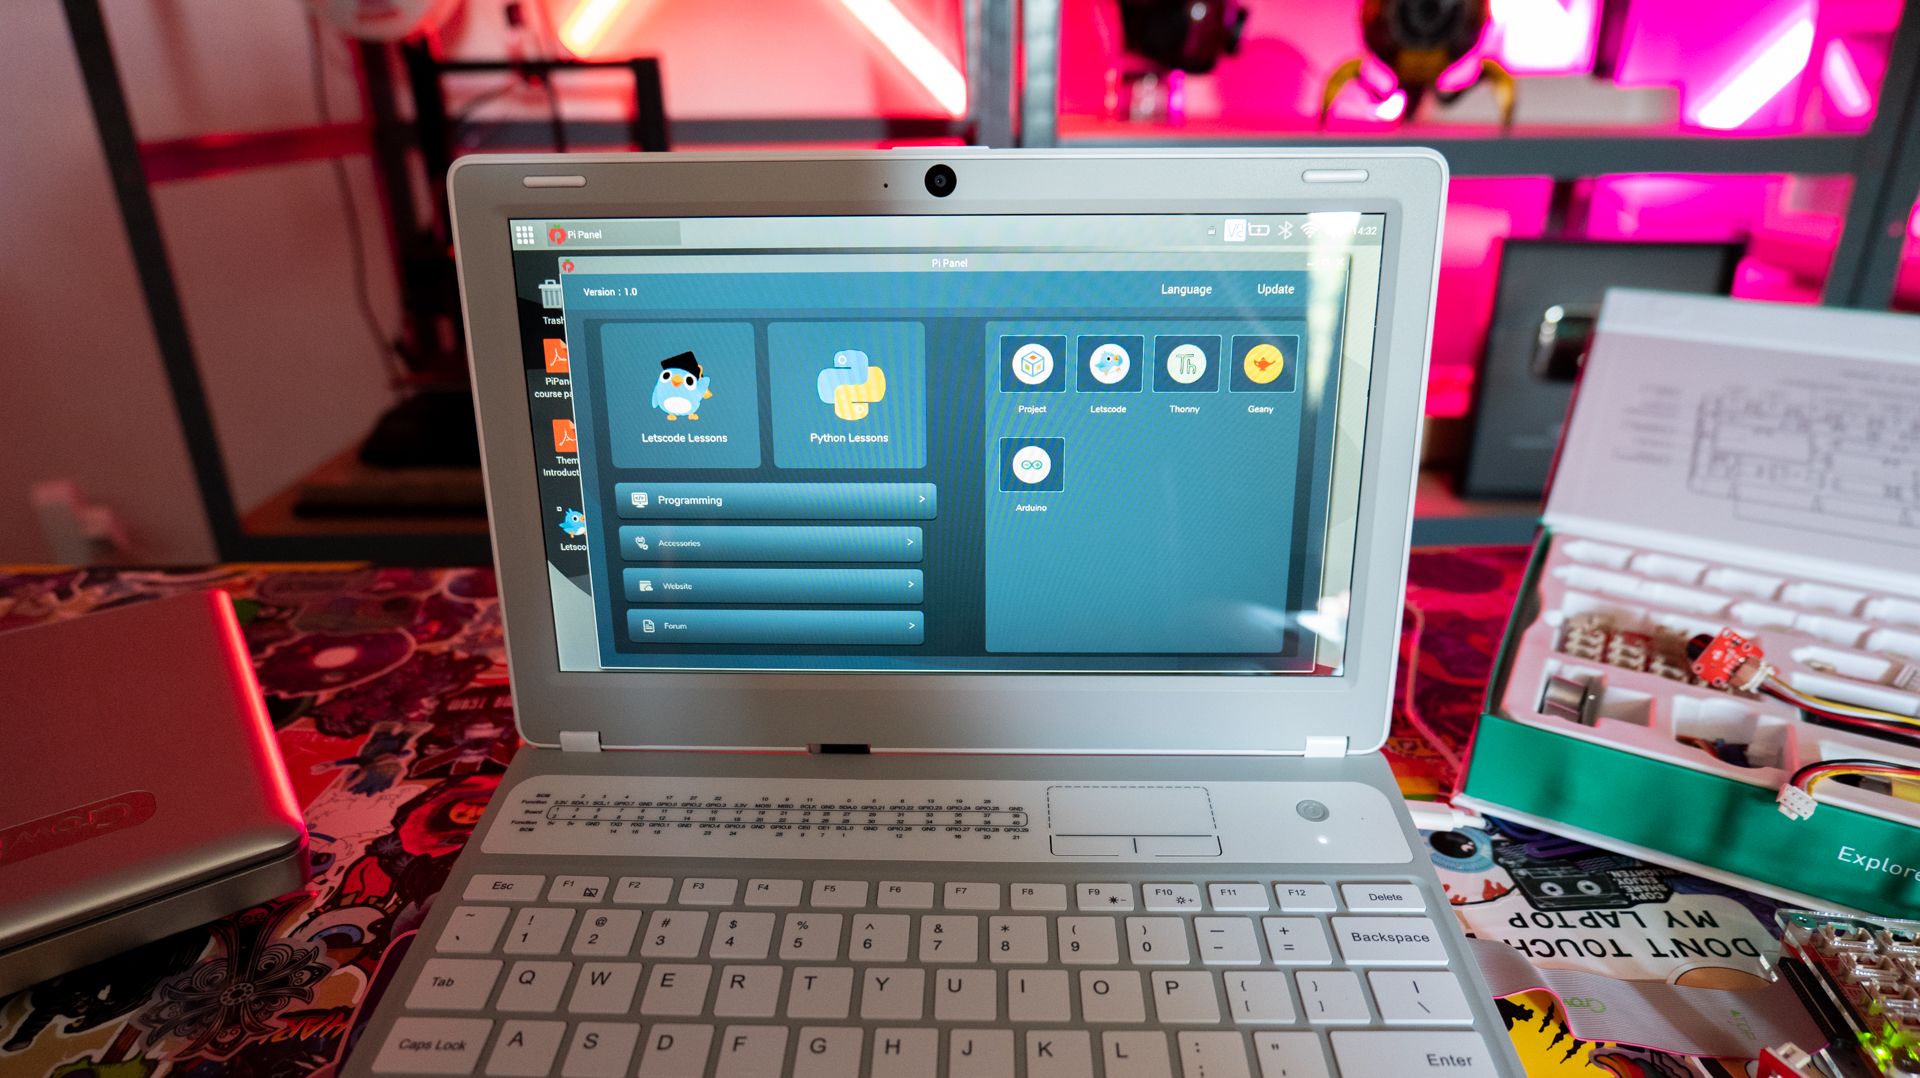 crowpi L pi laptop - screen detail wider